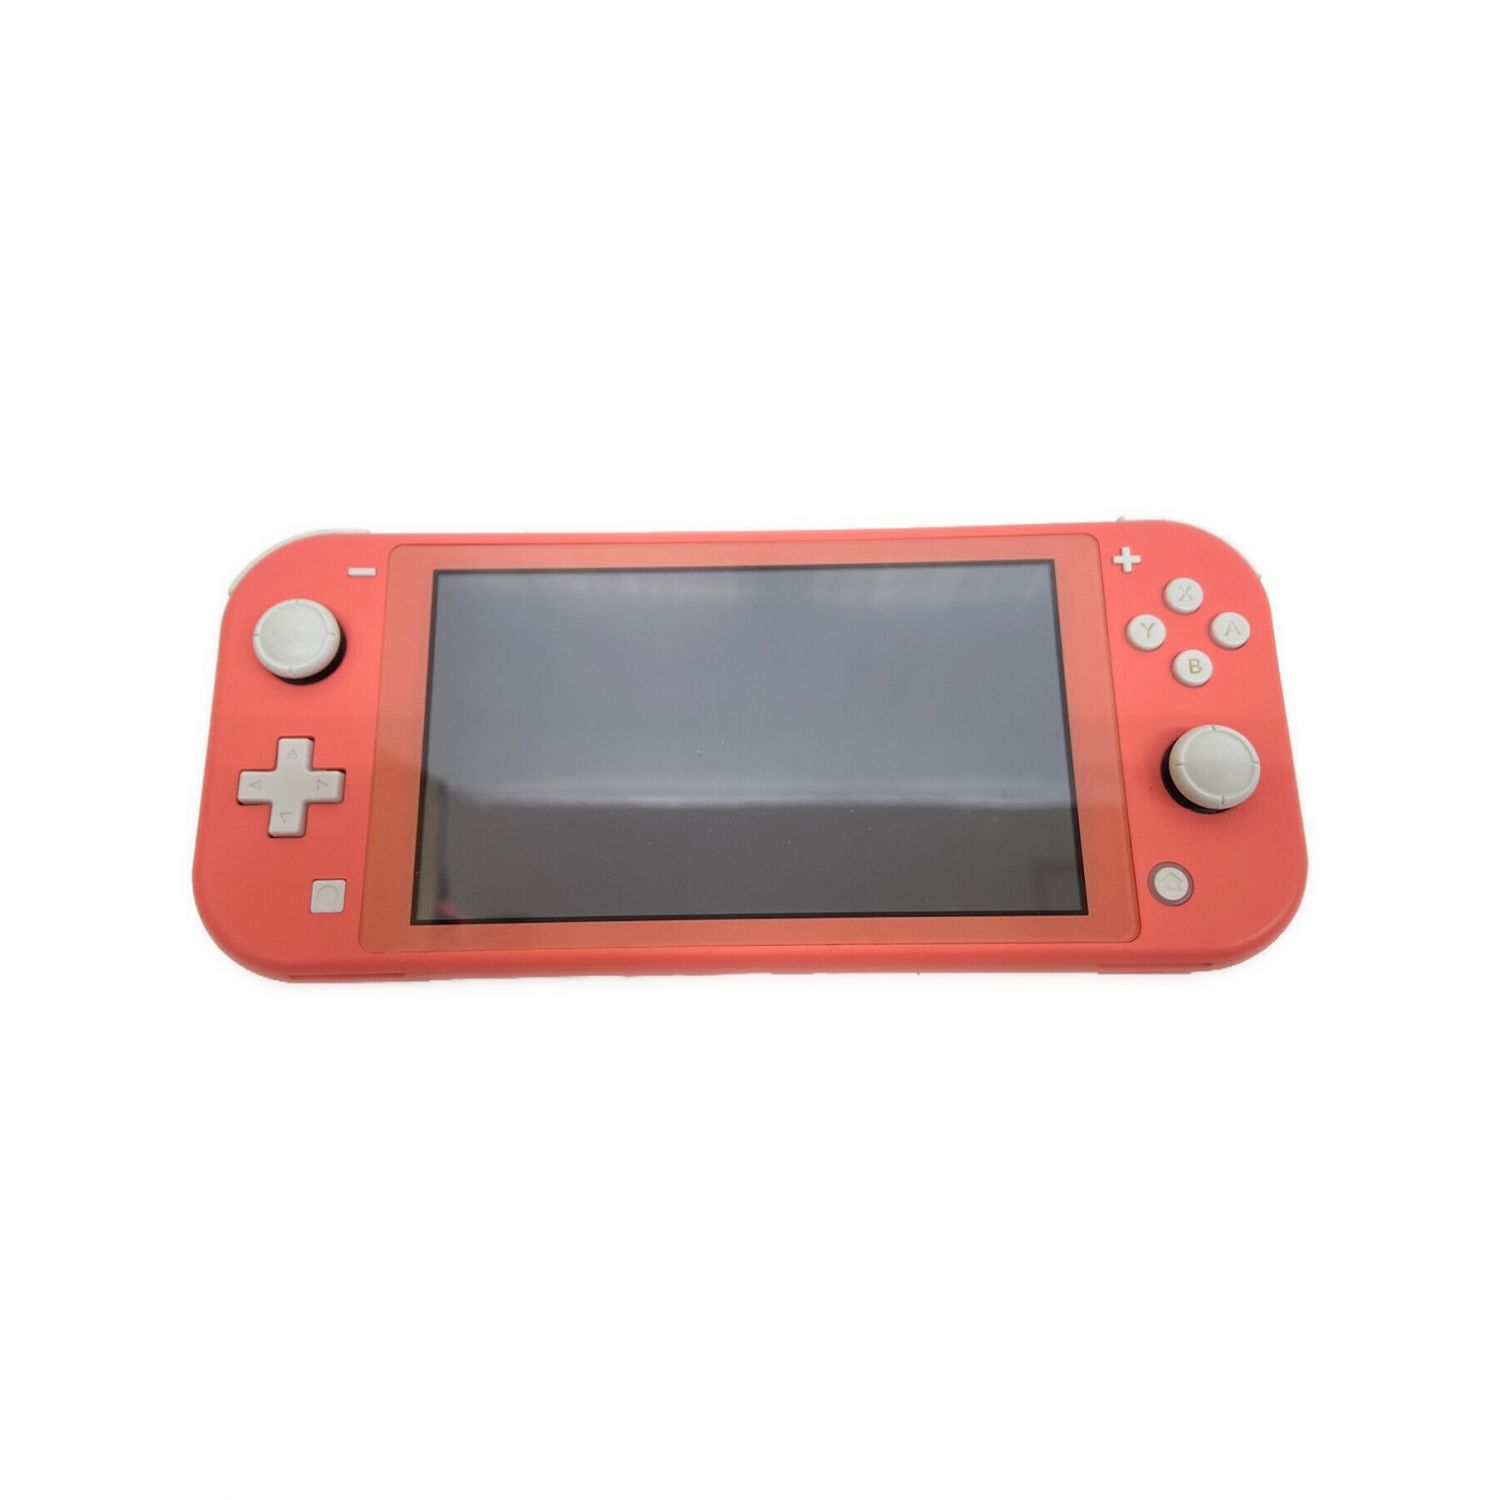 Nintendo Switch Liteブラック本体 品　動作確認済